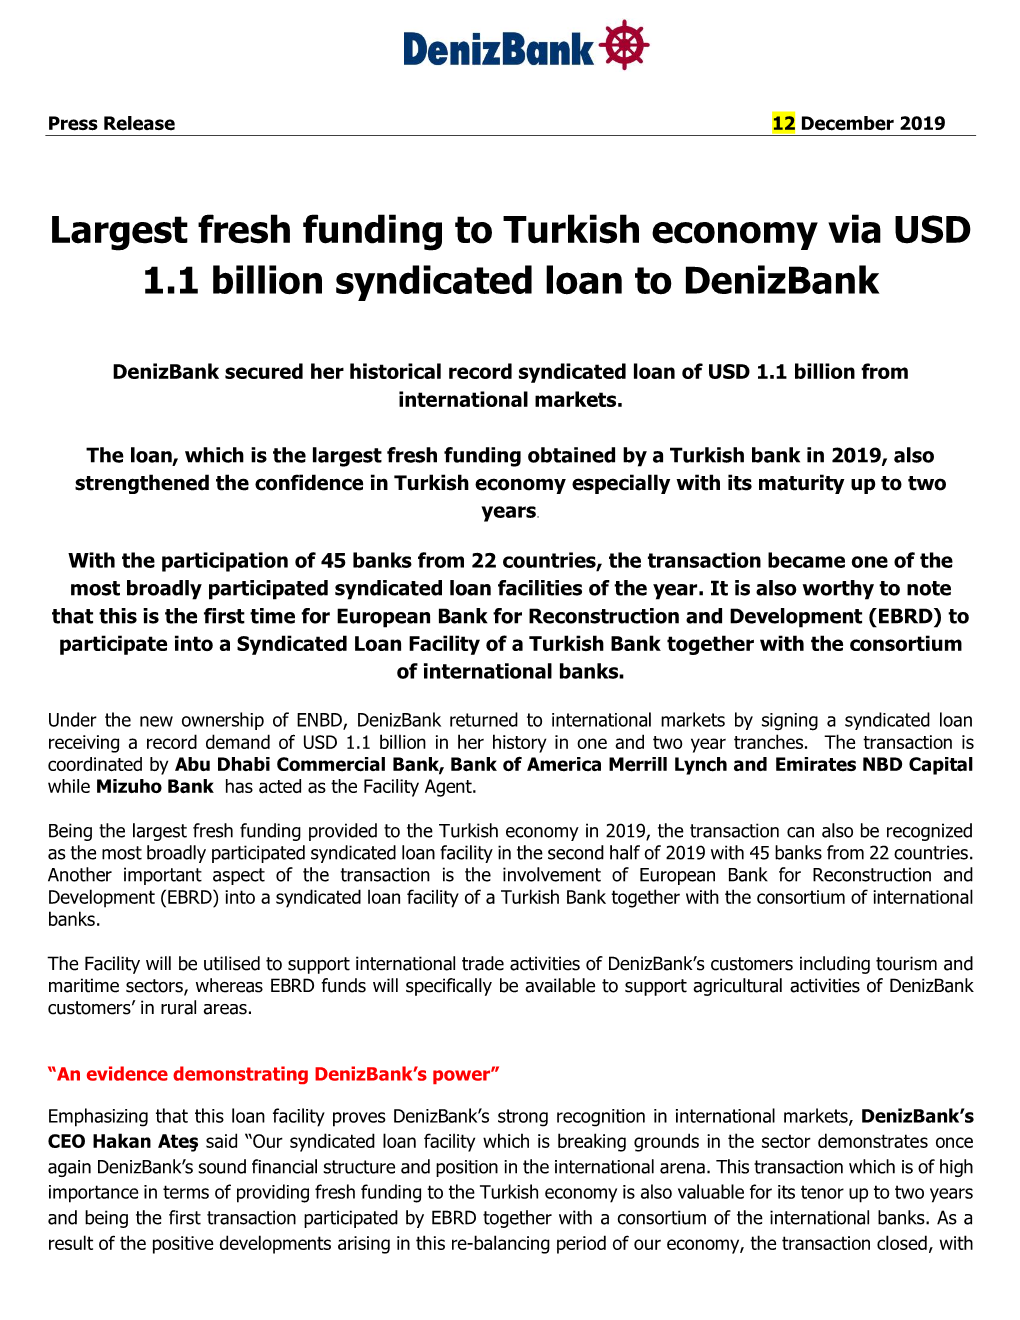 Largest Fresh Funding to Turkish Economy Via USD 1.1 Billion Syndicated Loan to Denizbank